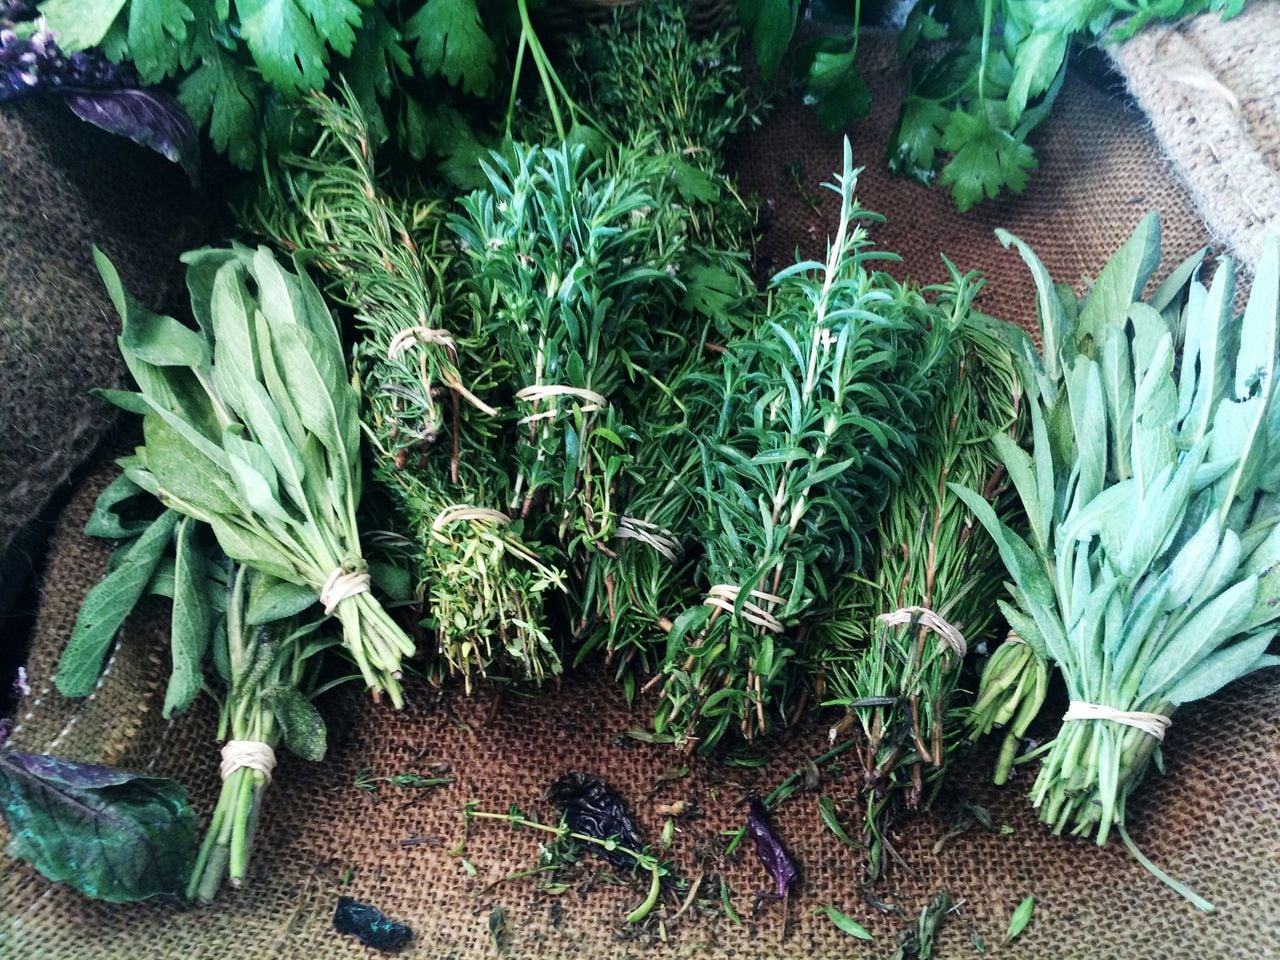 thyme,parsley, cilantro, oregano, basil, and rosemary